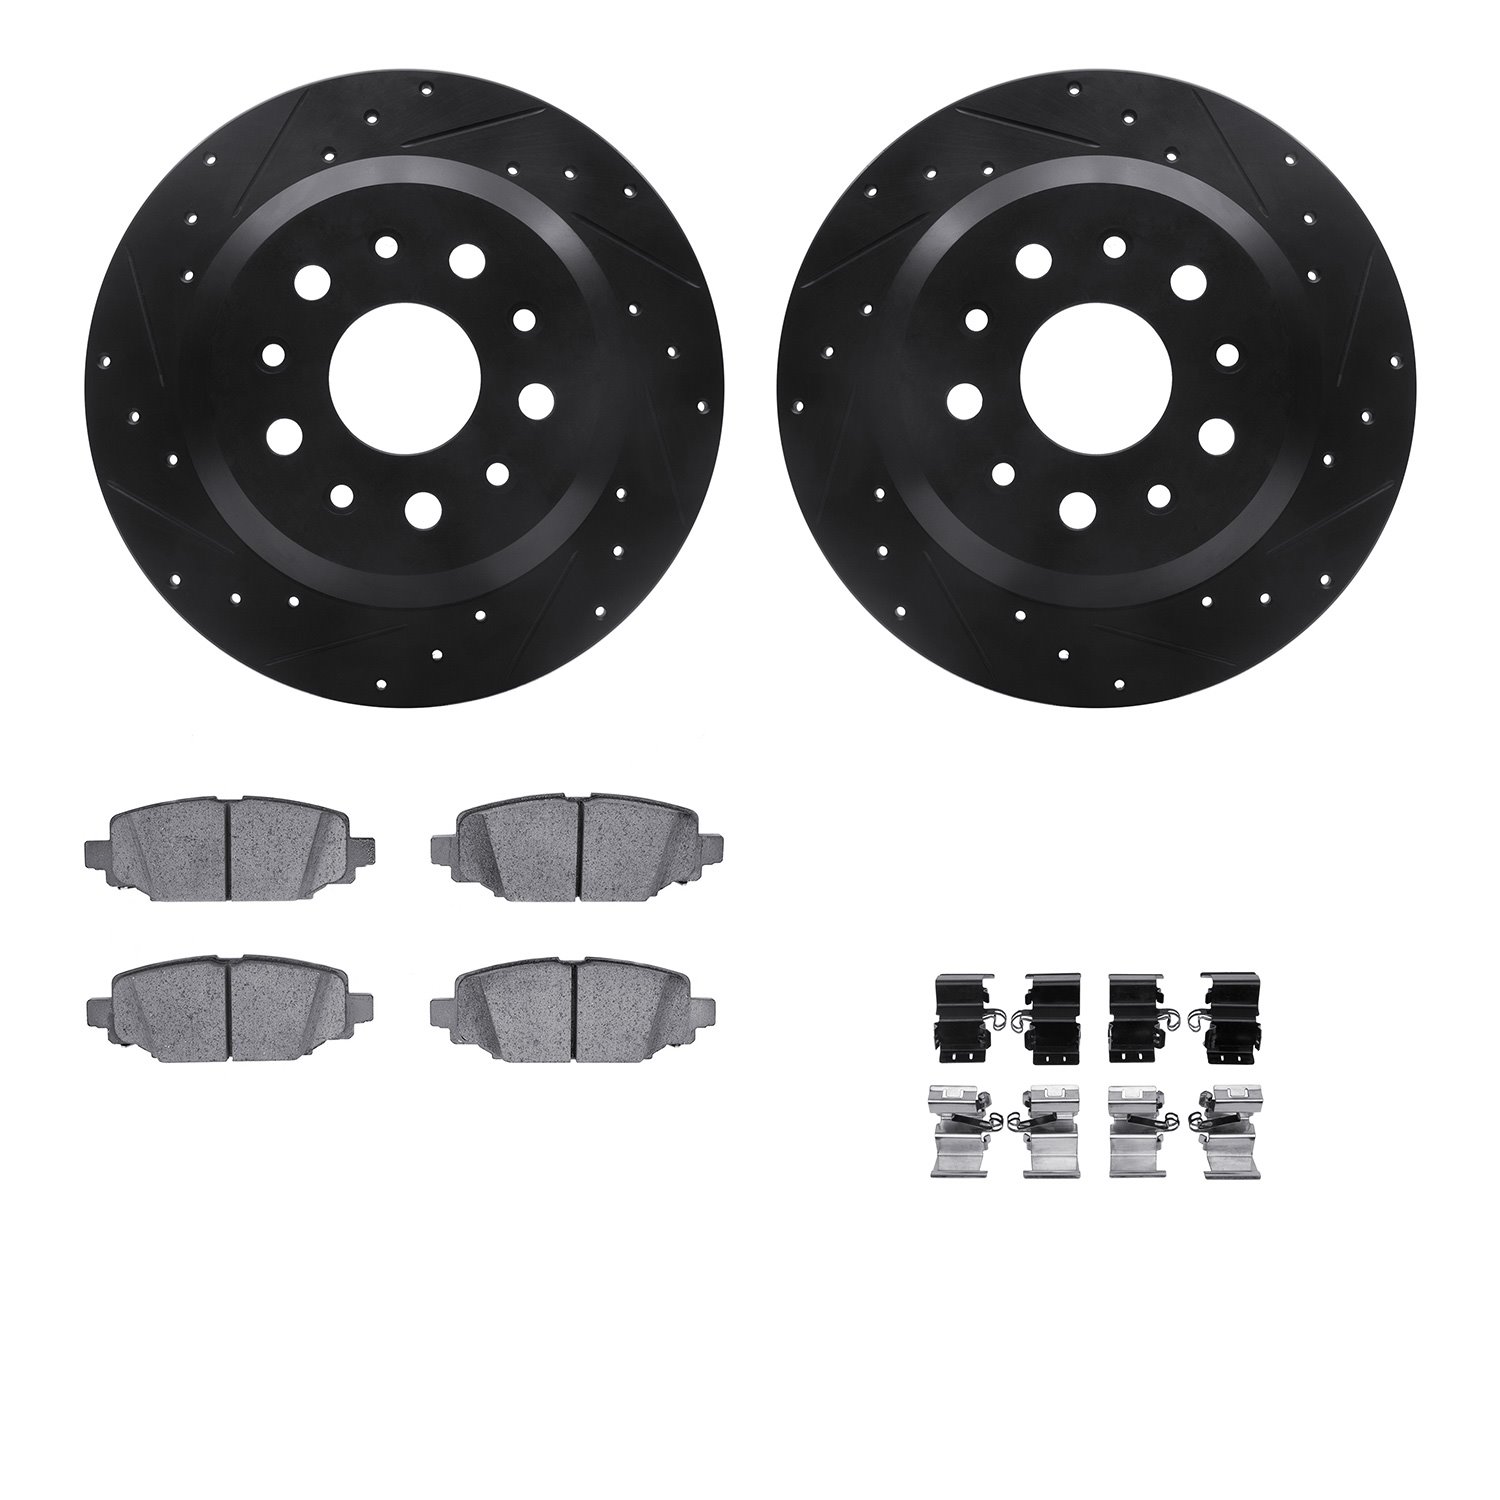 8412-42046 Drilled/Slotted Brake Rotors with Ultimate-Duty Brake Pads Kit & Hardware [Black], Fits Select Mopar, Position: Rear